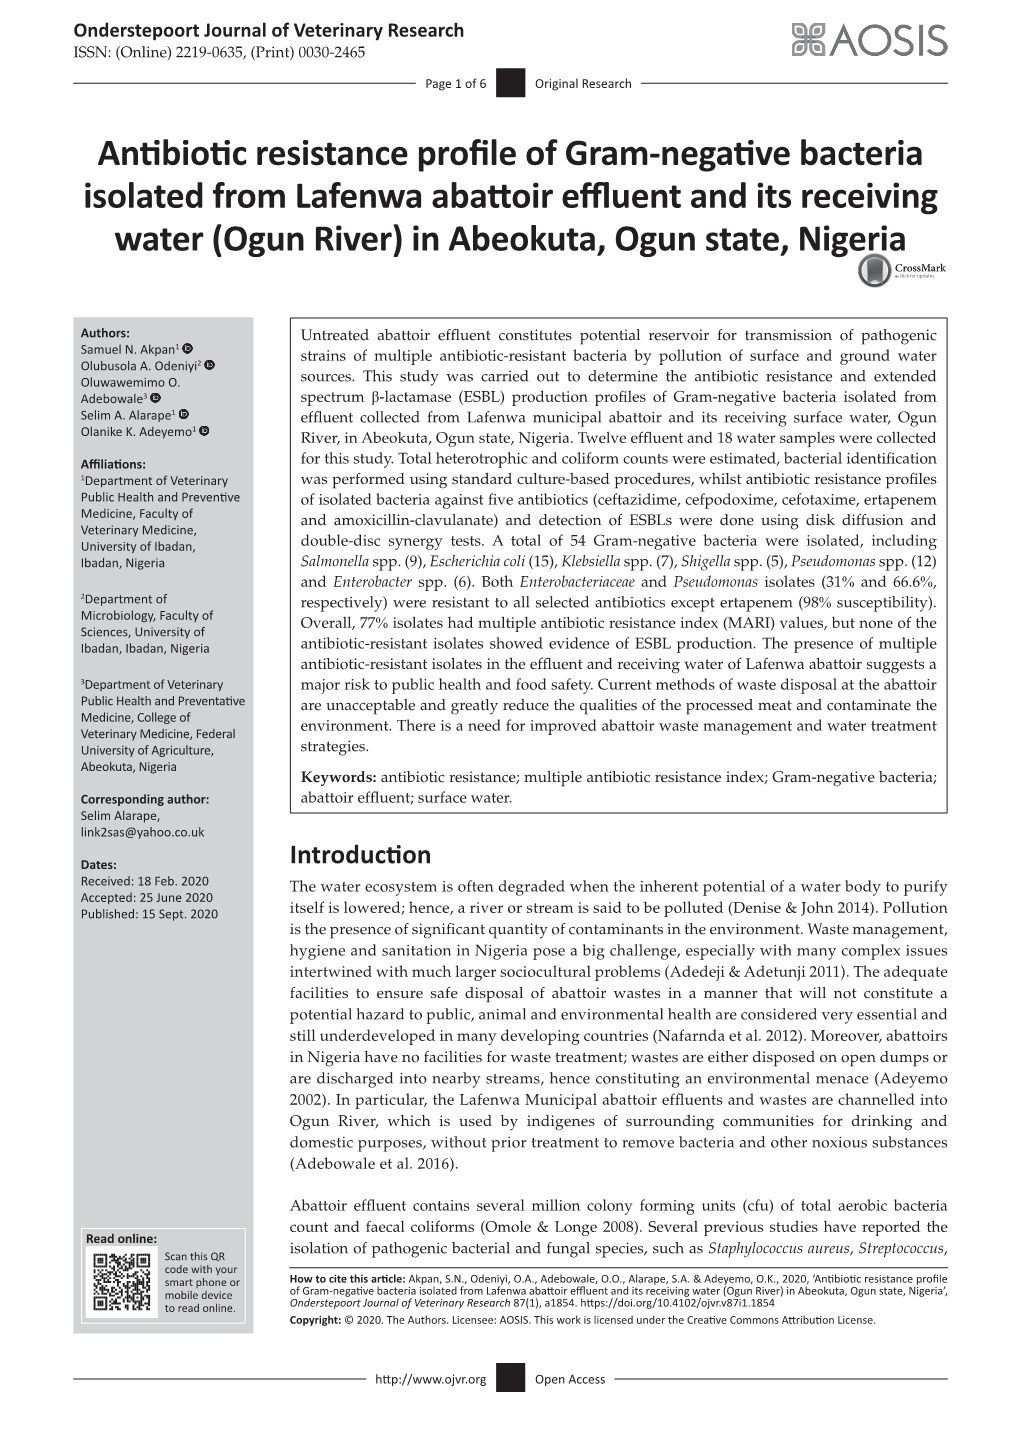 Antibiotic Resistance Profile of Gram-Negative Bacteria Isolated from Lafenwa Abattoir Effluent and Its Receiving Water (Ogun River) in Abeokuta, Ogun State, Nigeria